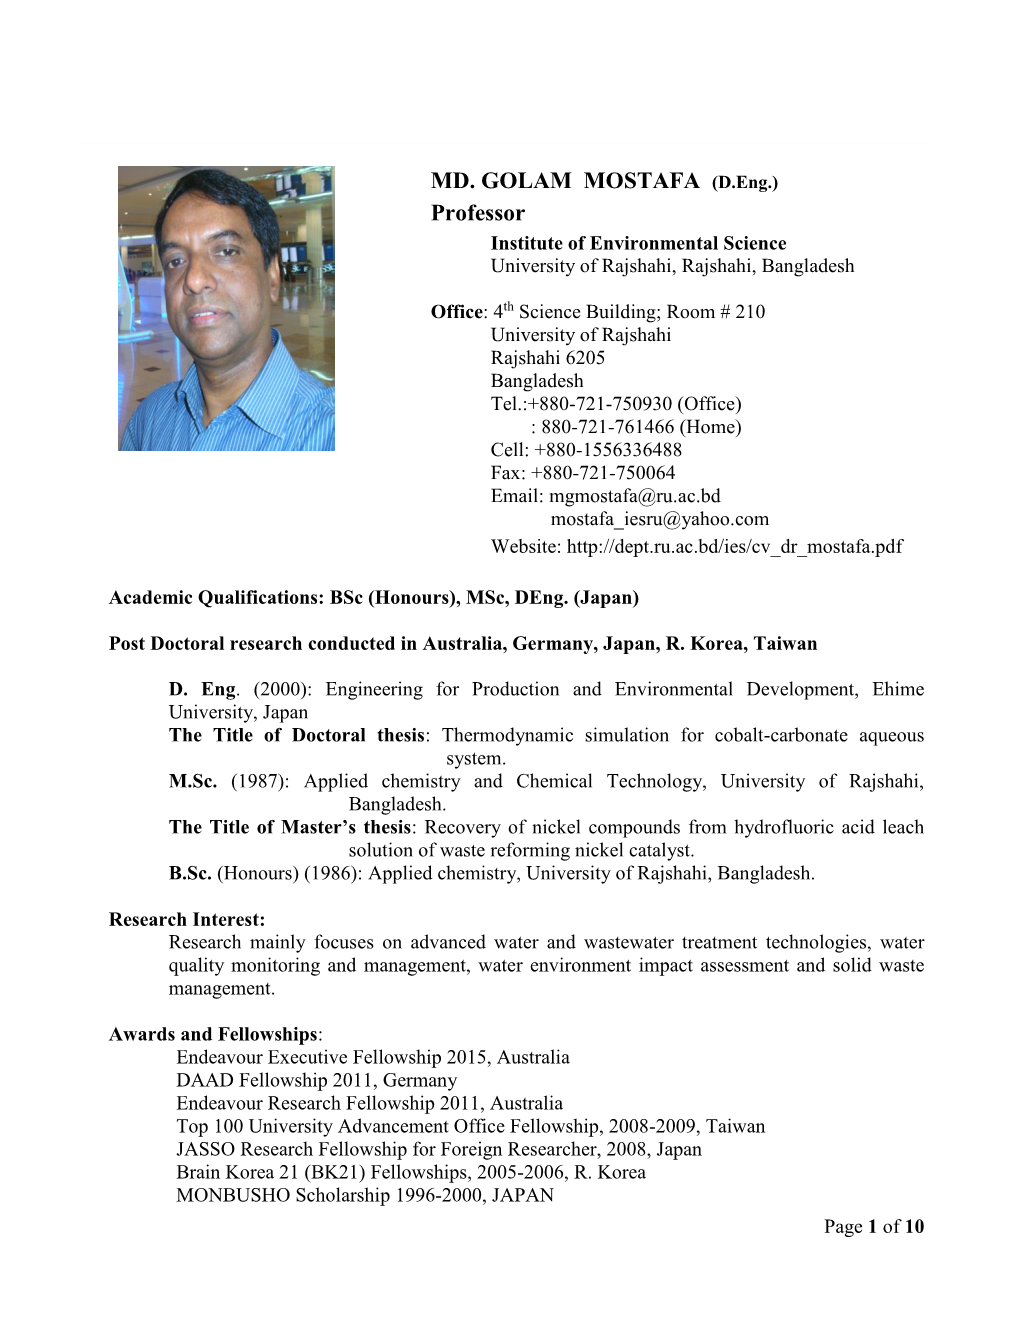 MD. GOLAM MOSTAFA (D.Eng.) Professor Institute of Environmental Science University of Rajshahi, Rajshahi, Bangladesh